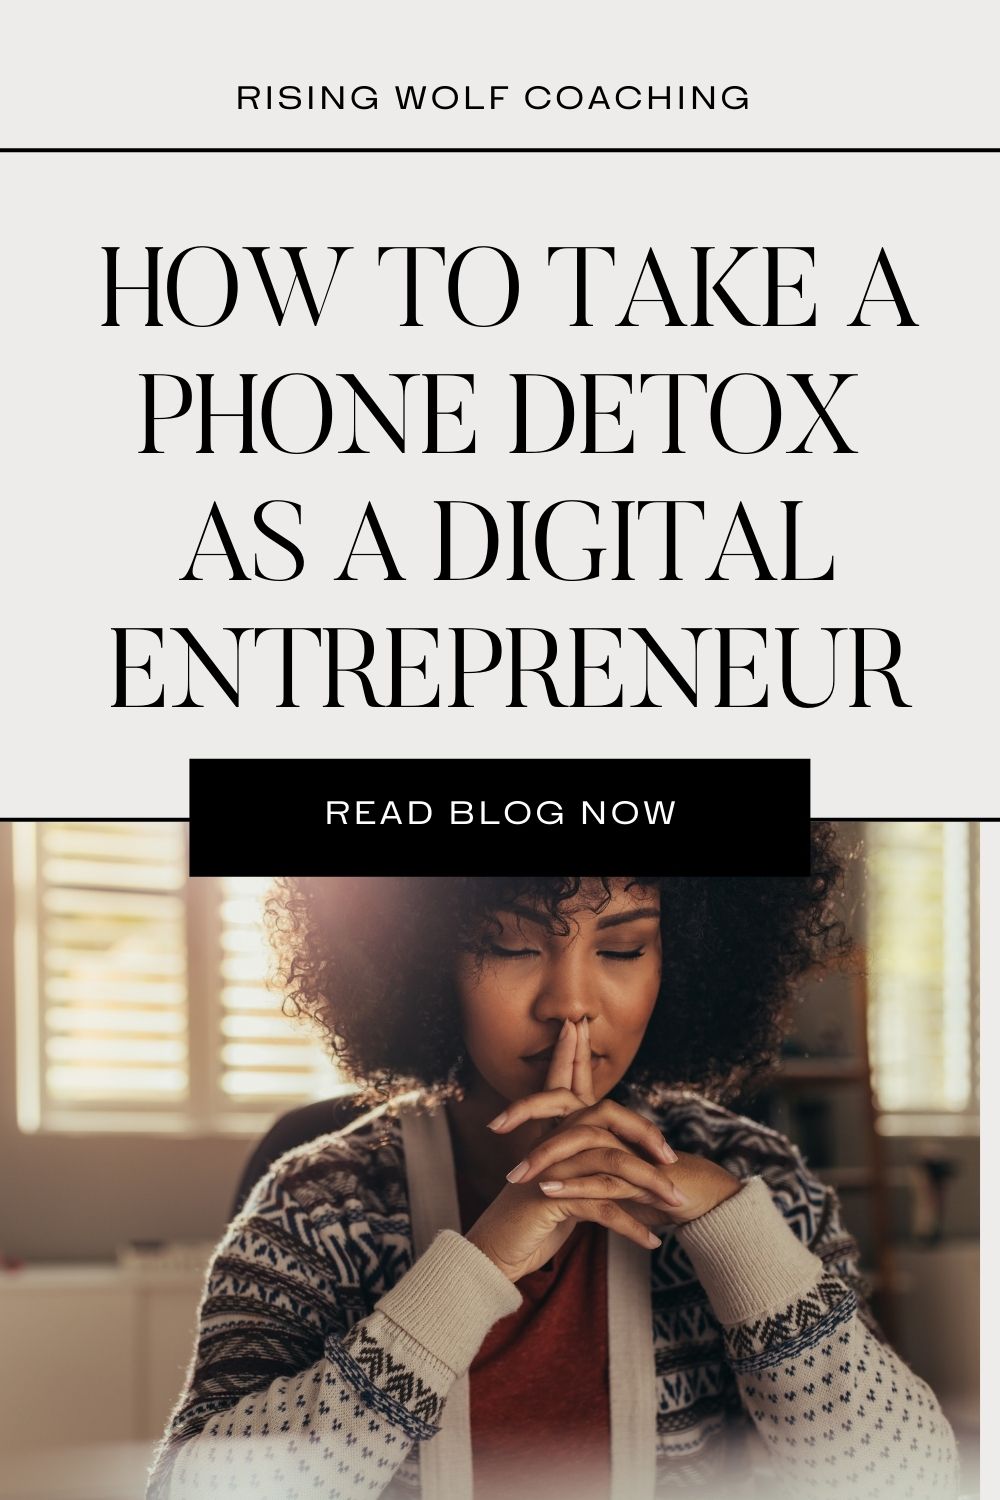 How to Take a Phone Detox as a Digital Entrepreneur